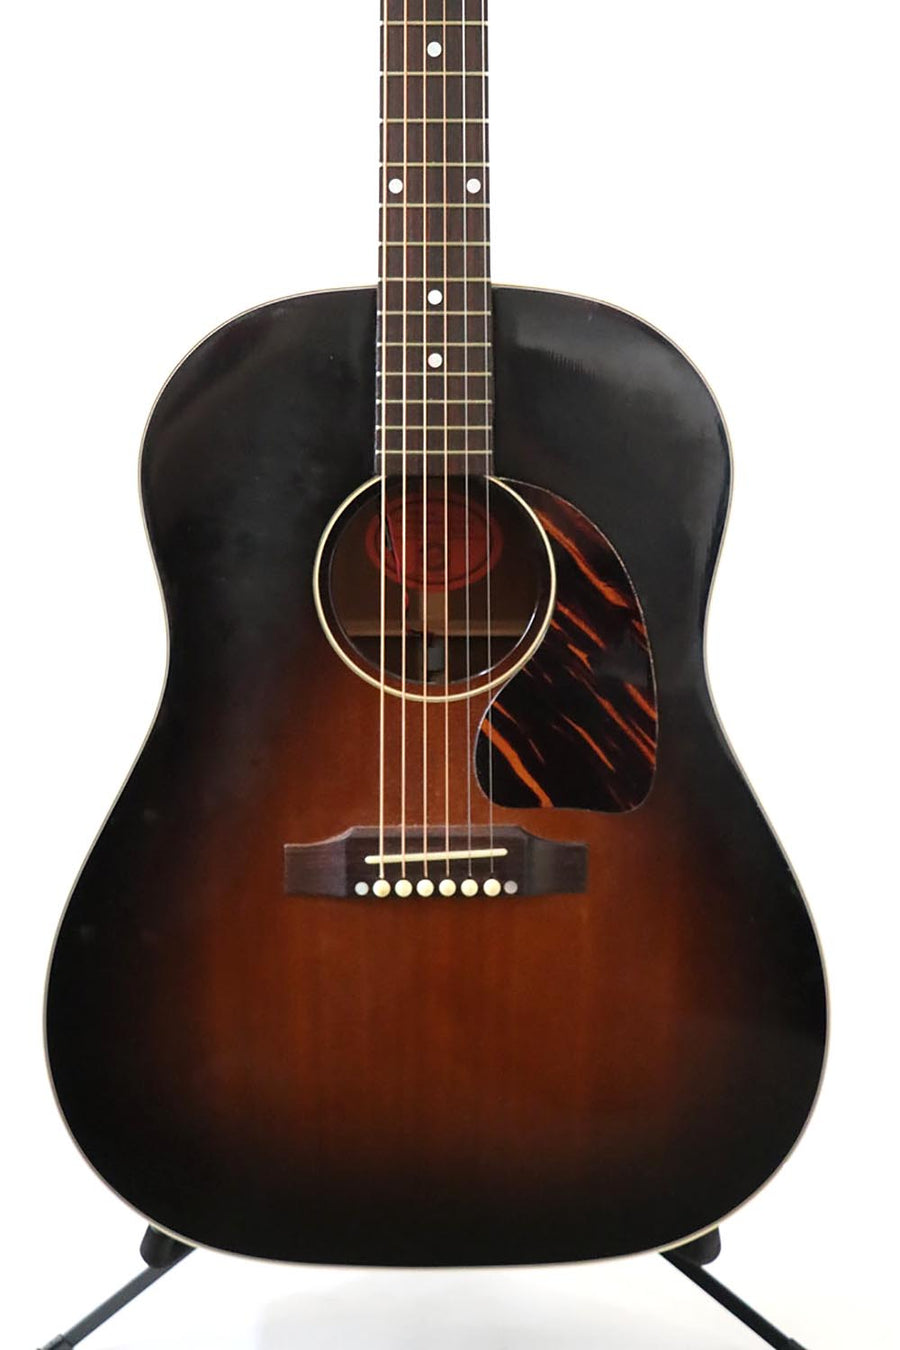 Gibson J45 2001